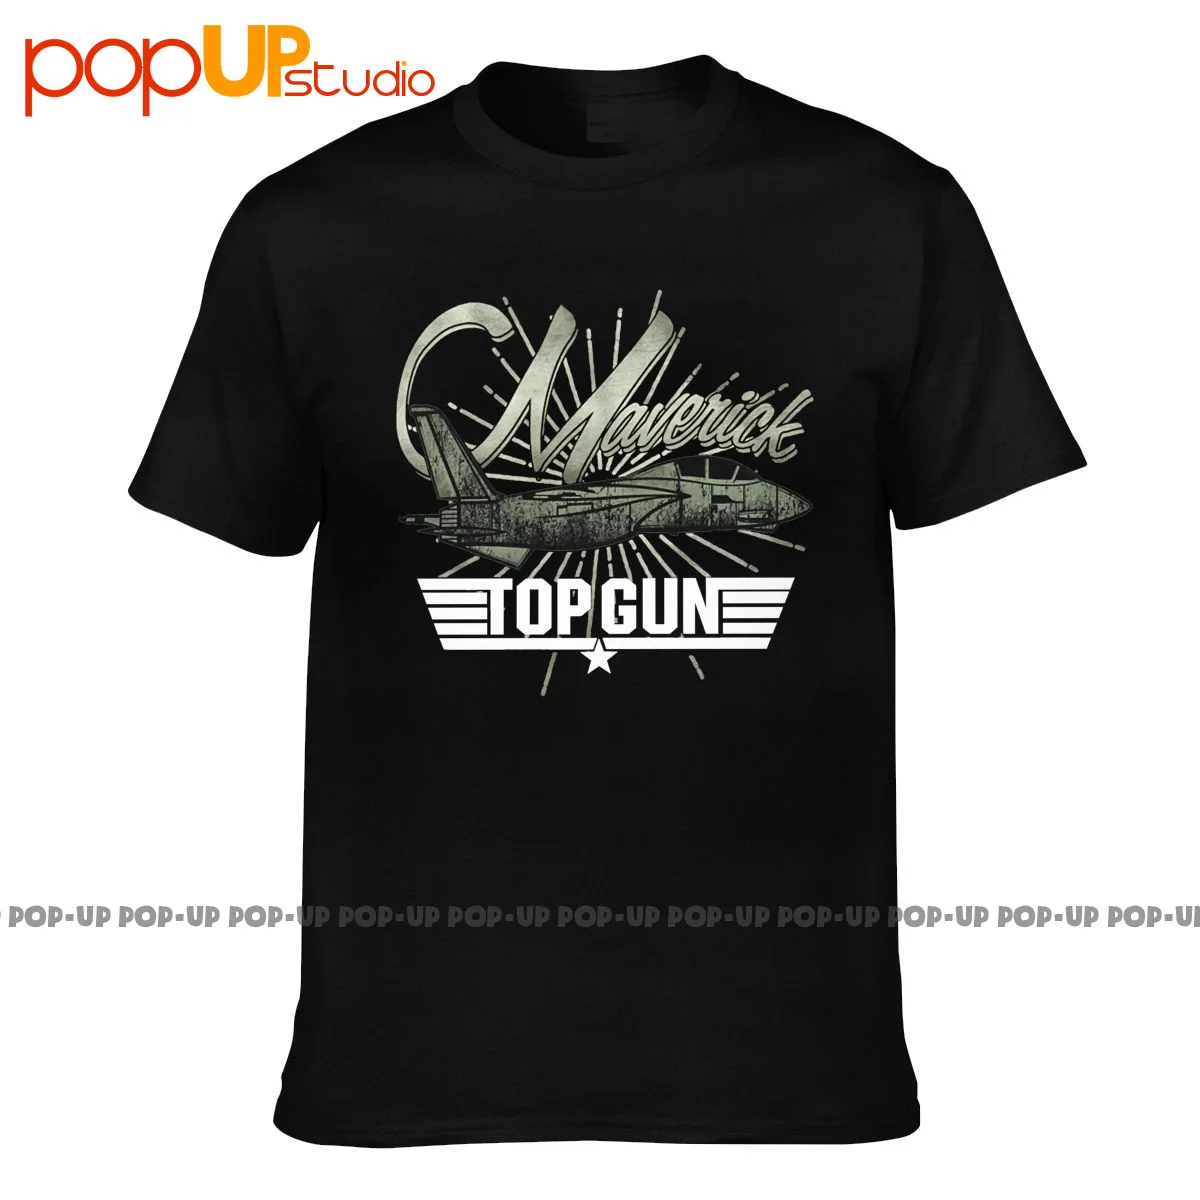 Personalized Callsign Top Gun t shirt, Maverick t shirt